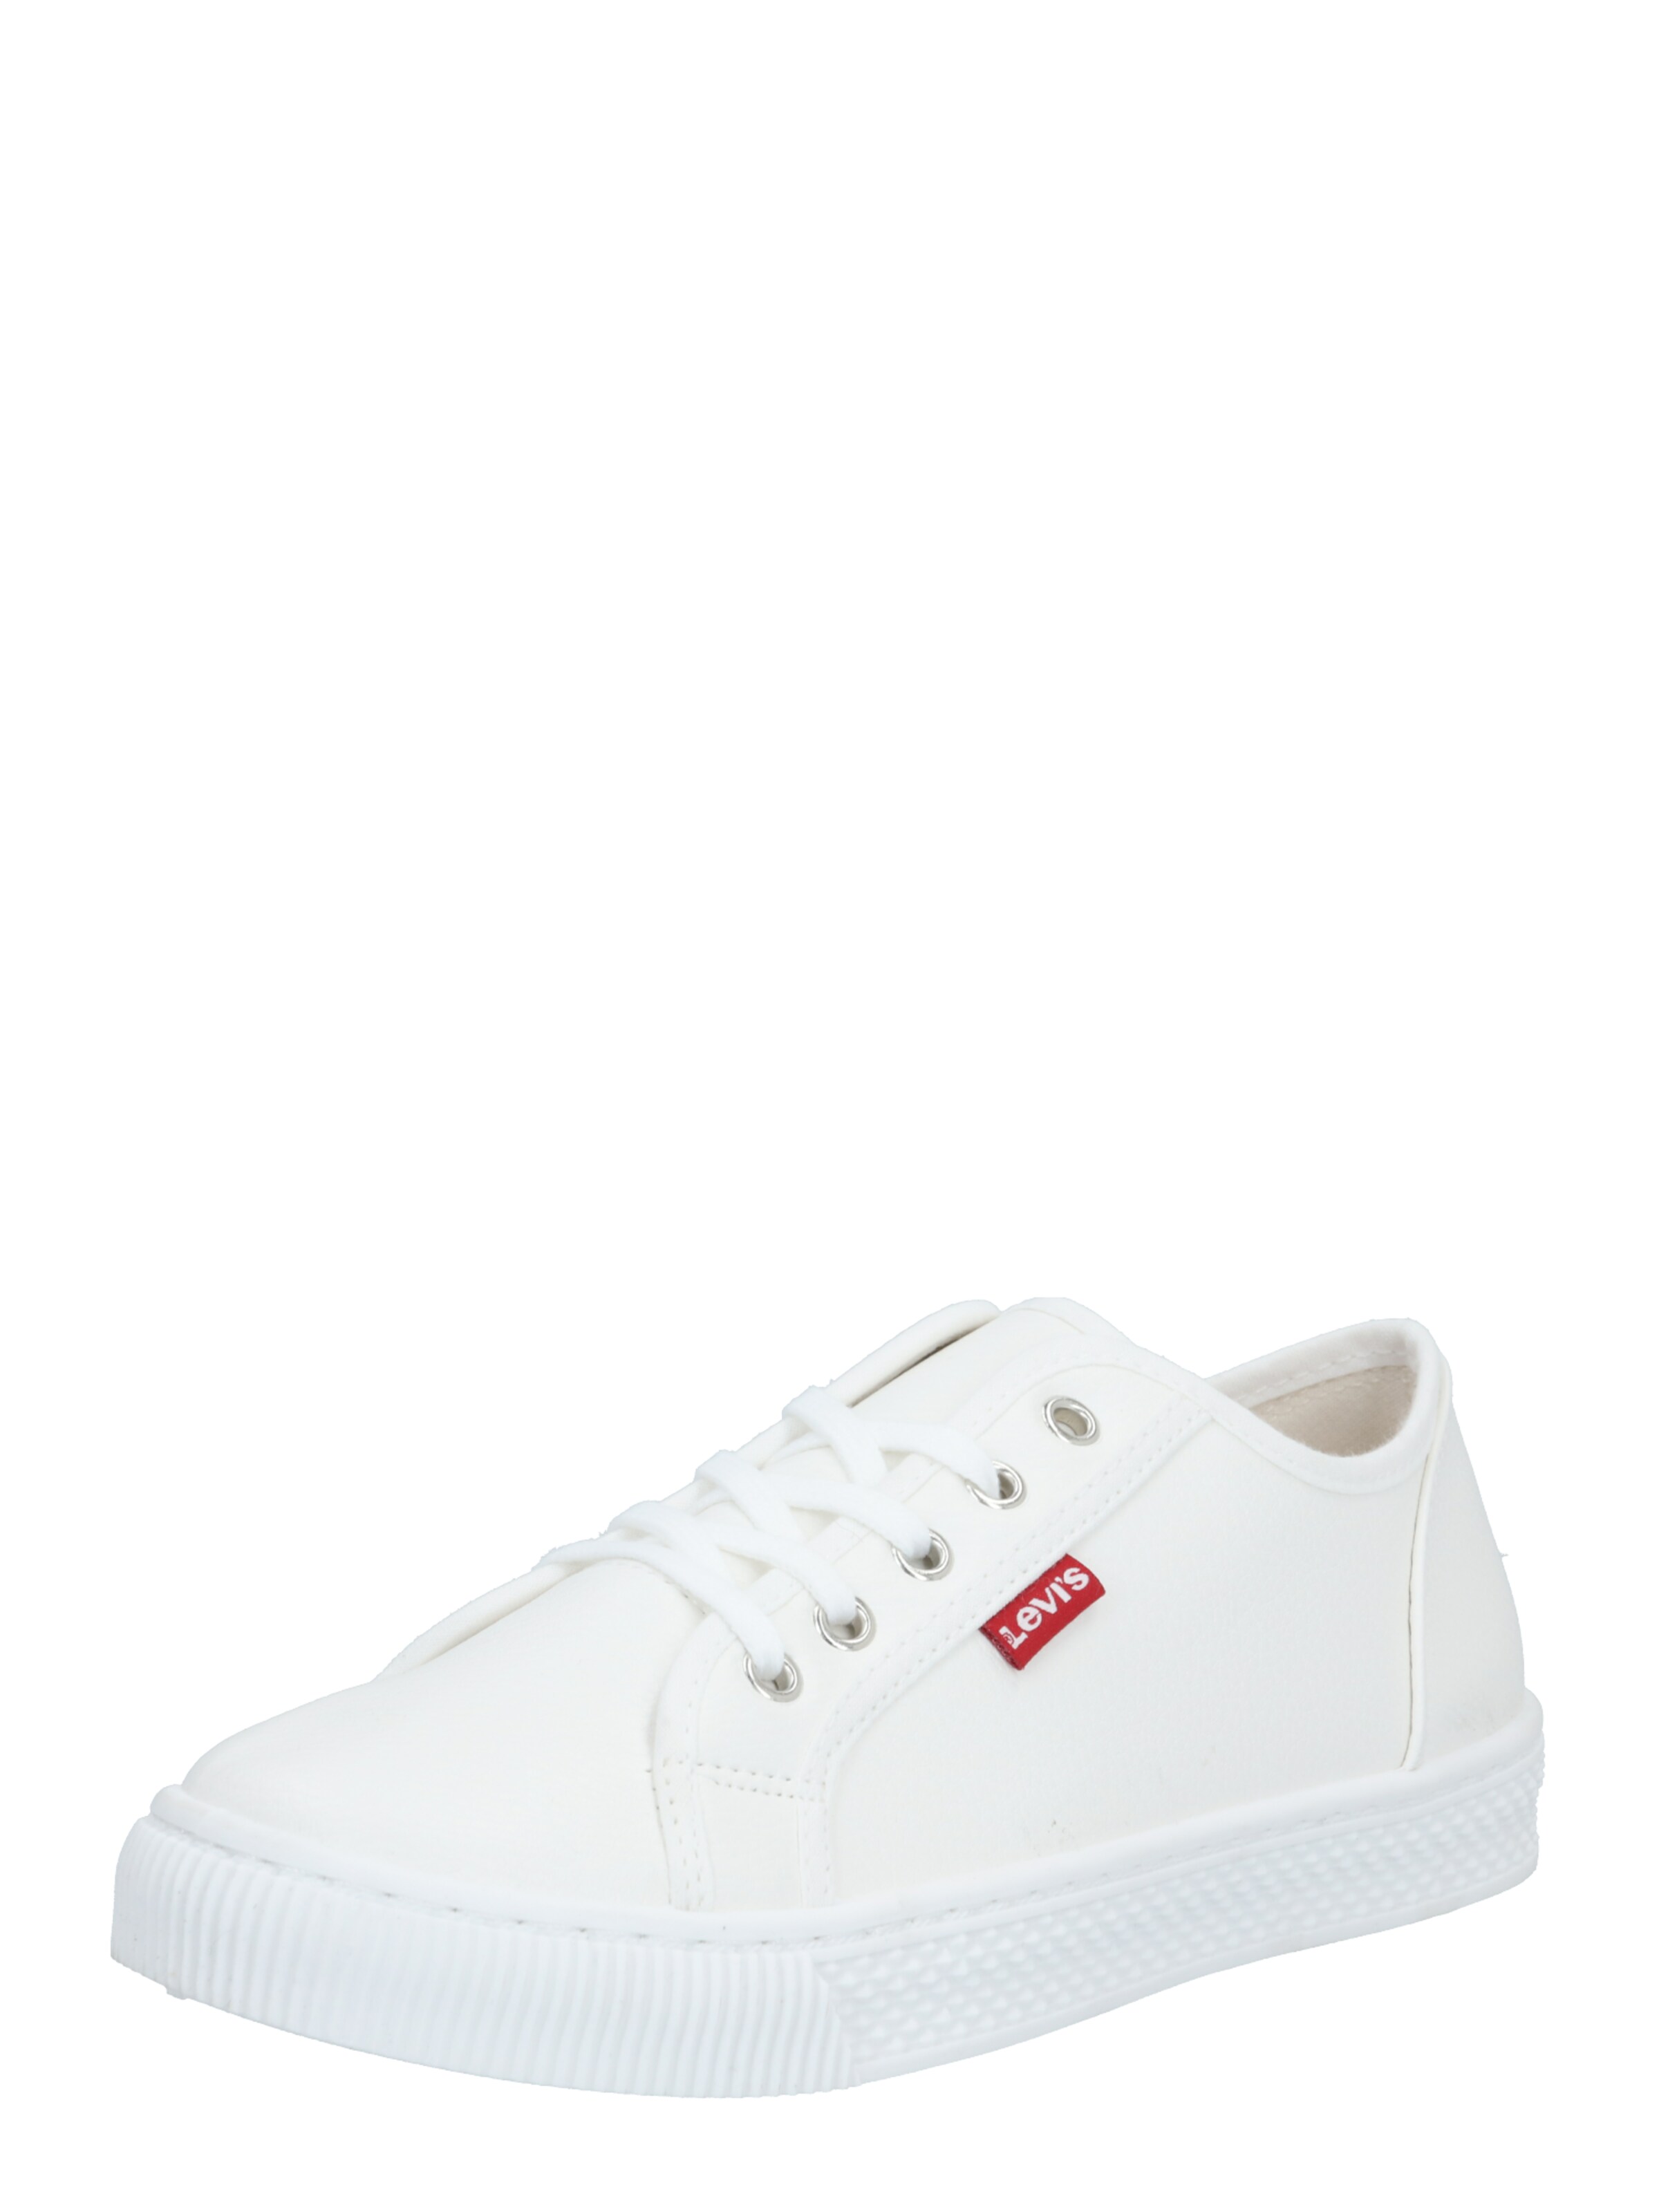 levi's sneakers white